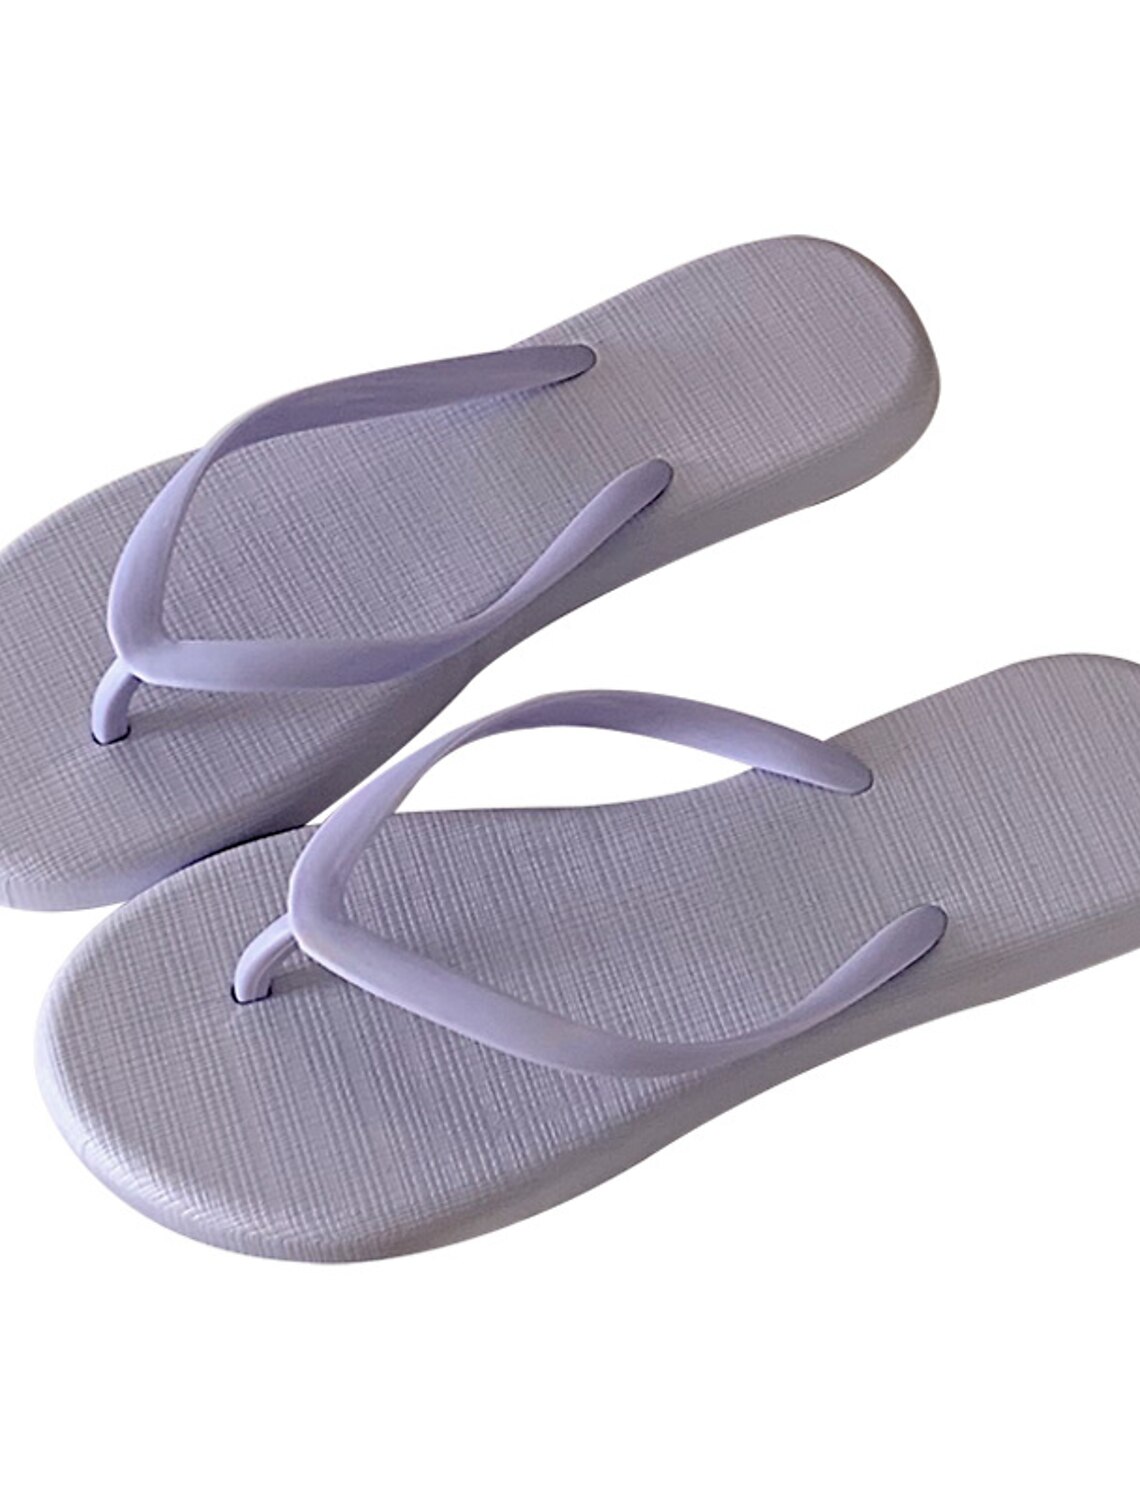 Havaianas New Slim Flip Flops Womens Sandals Petunia Purple 